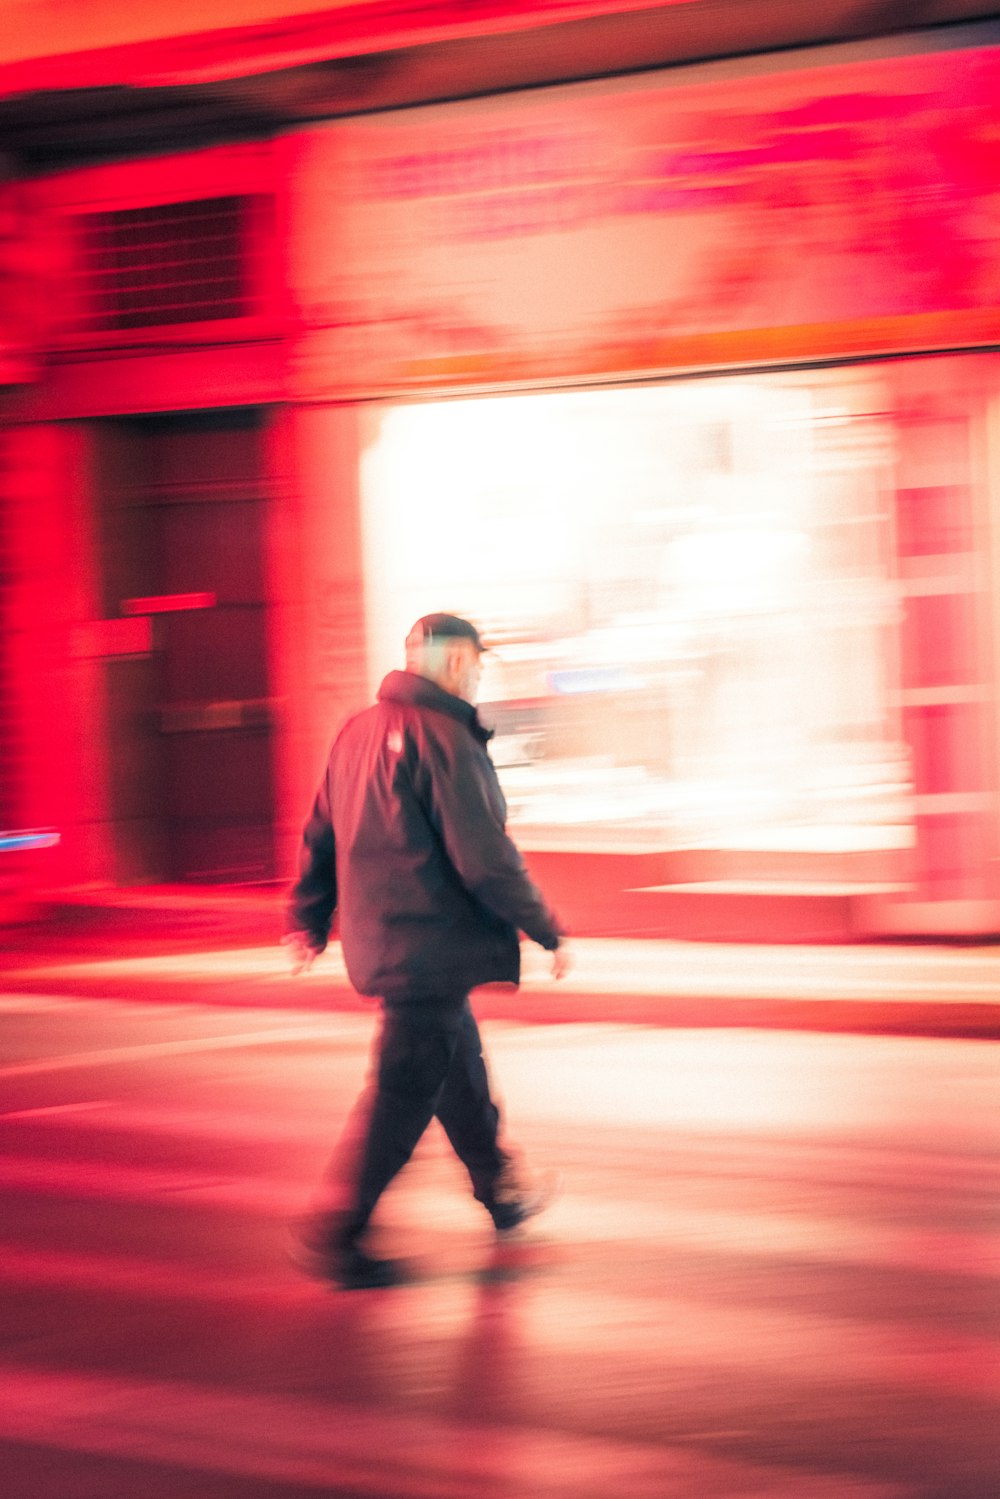 a blurry photo of a man walking down a street